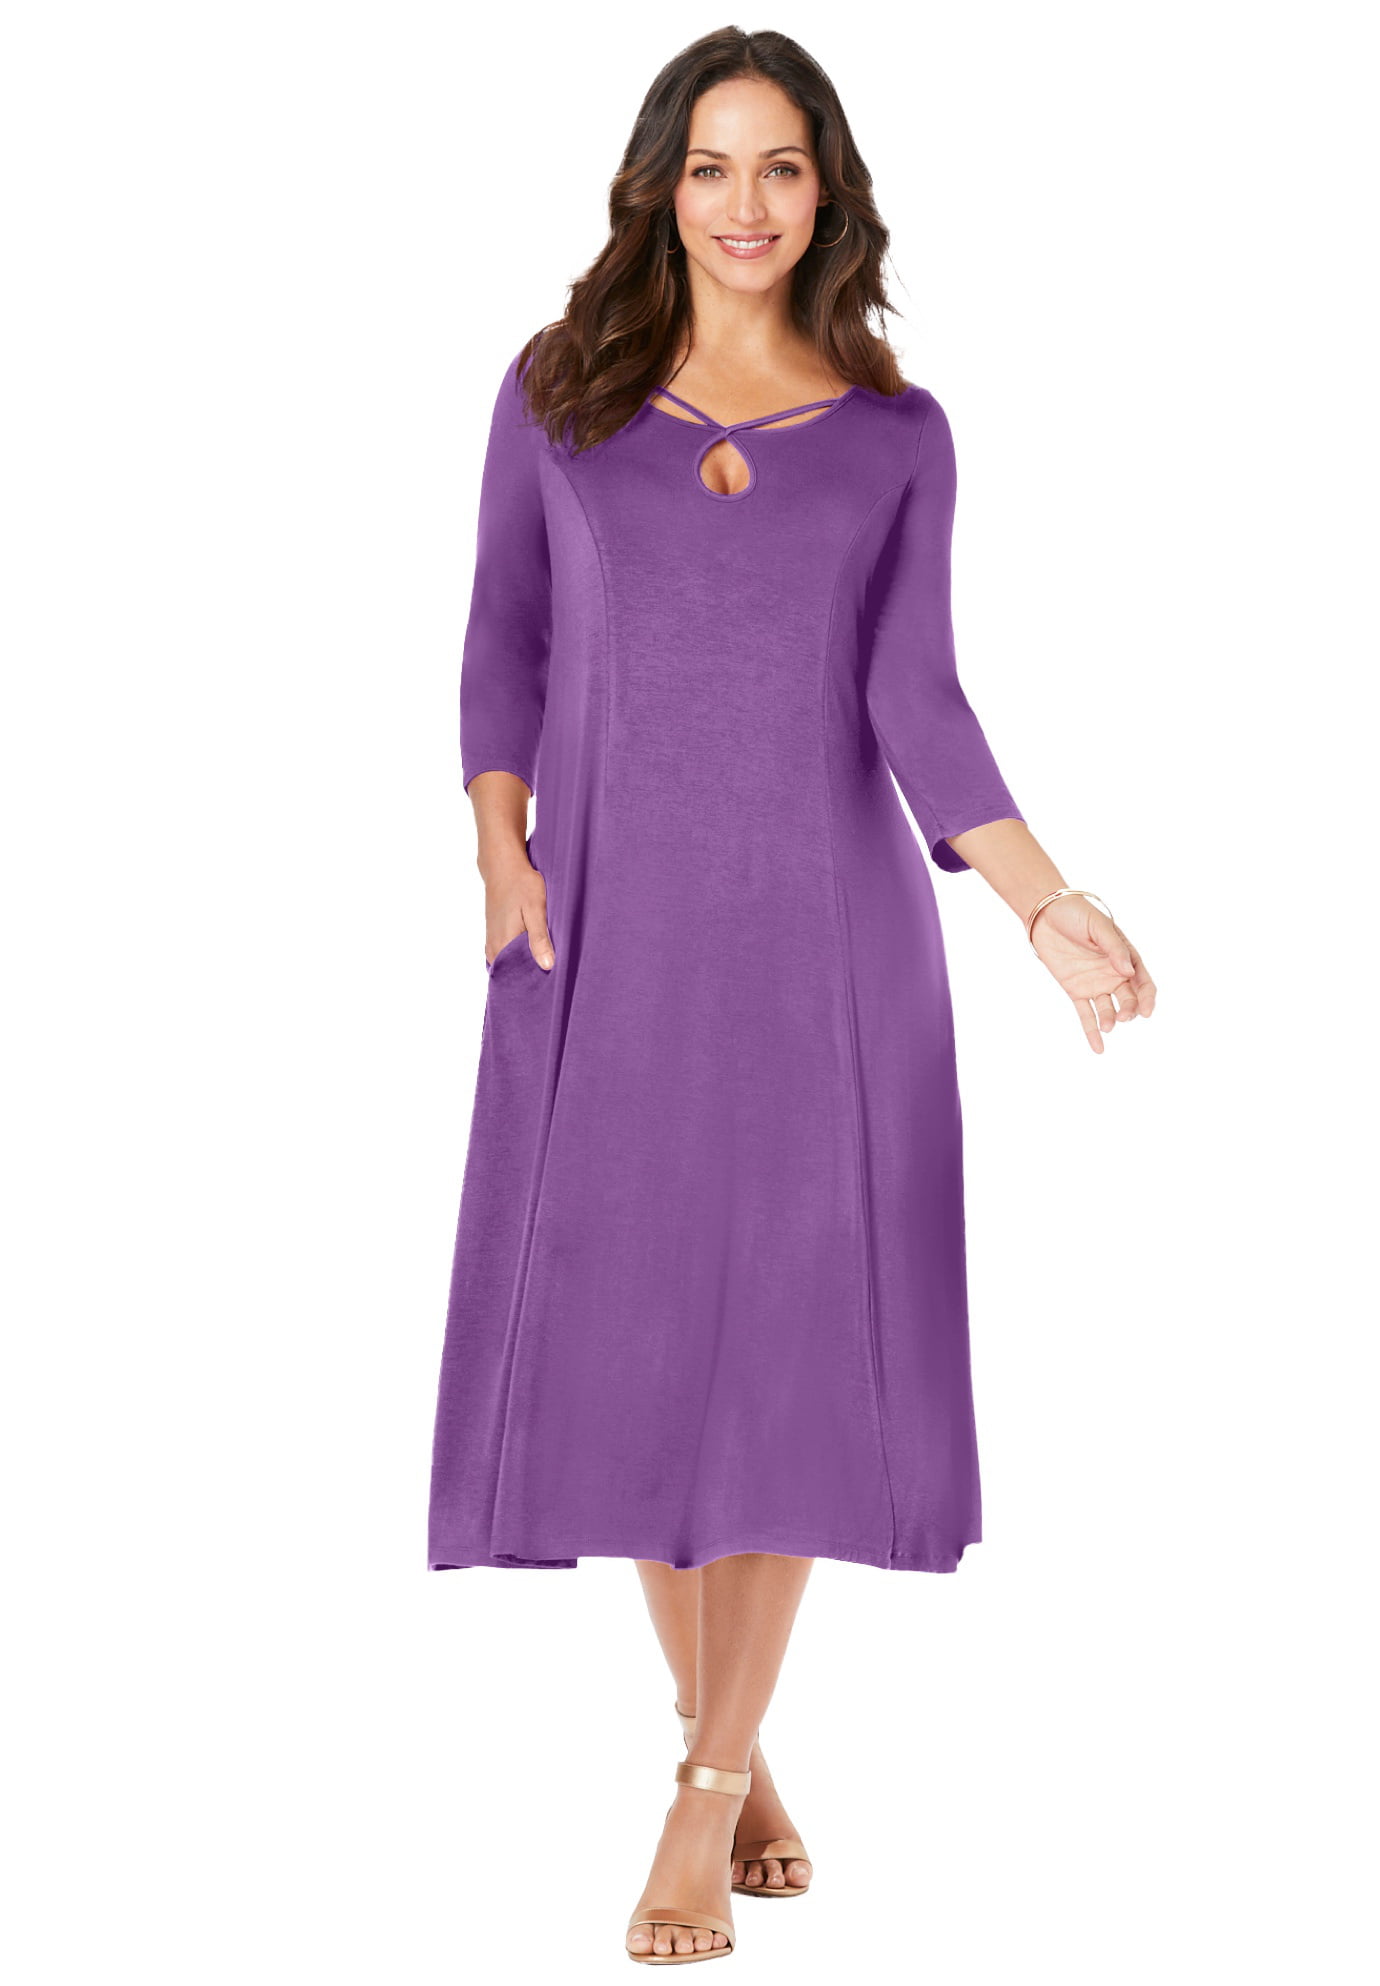 Jessica London Women's Plus Size Twisted Keyhole A-Line Dress - Walmart.com